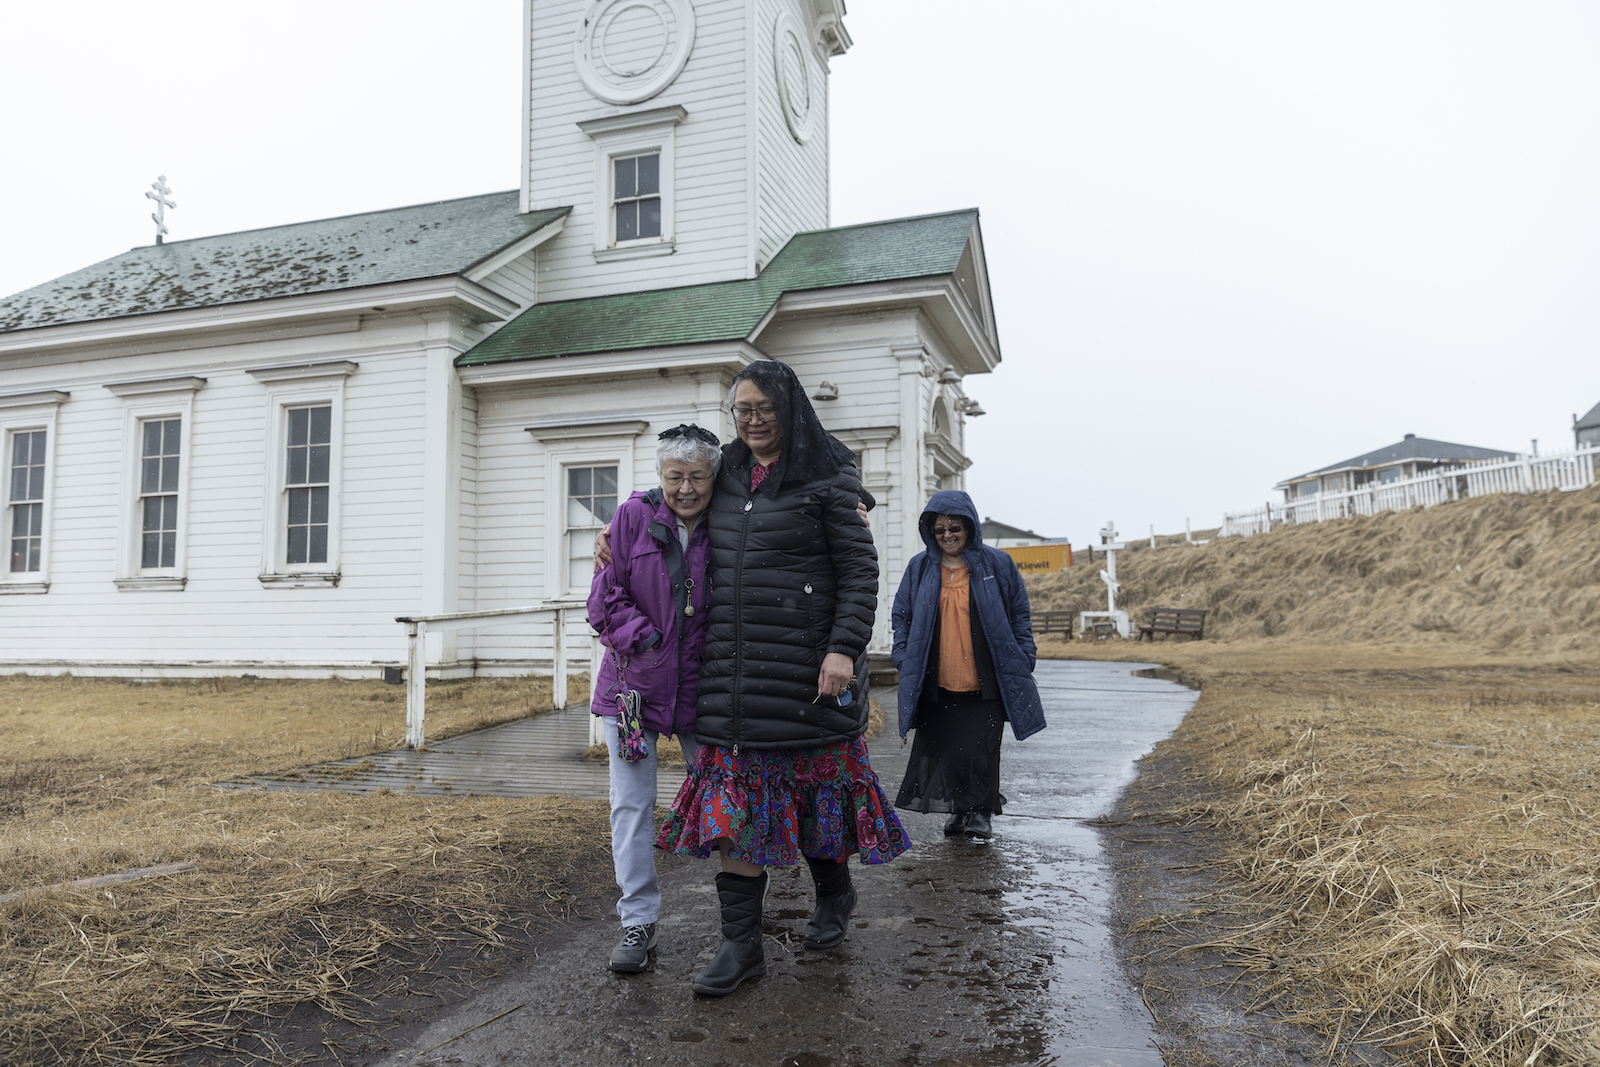 Three women walk away from a small white church